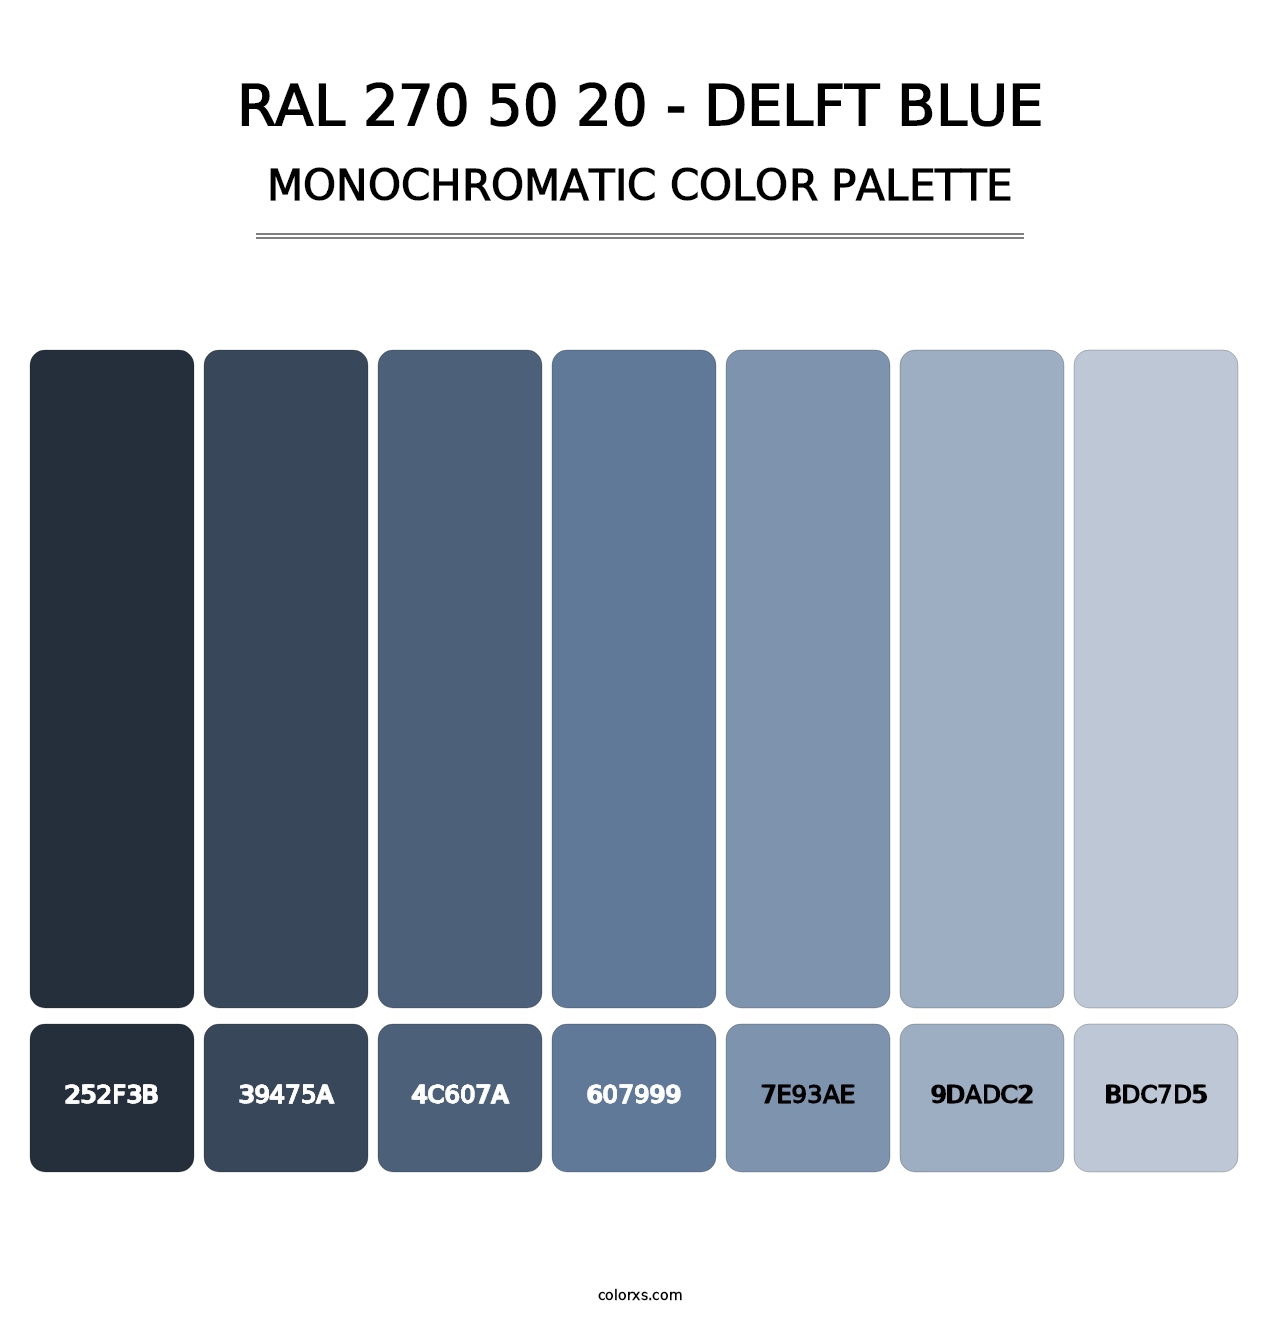 RAL 270 50 20 - Delft Blue - Monochromatic Color Palette